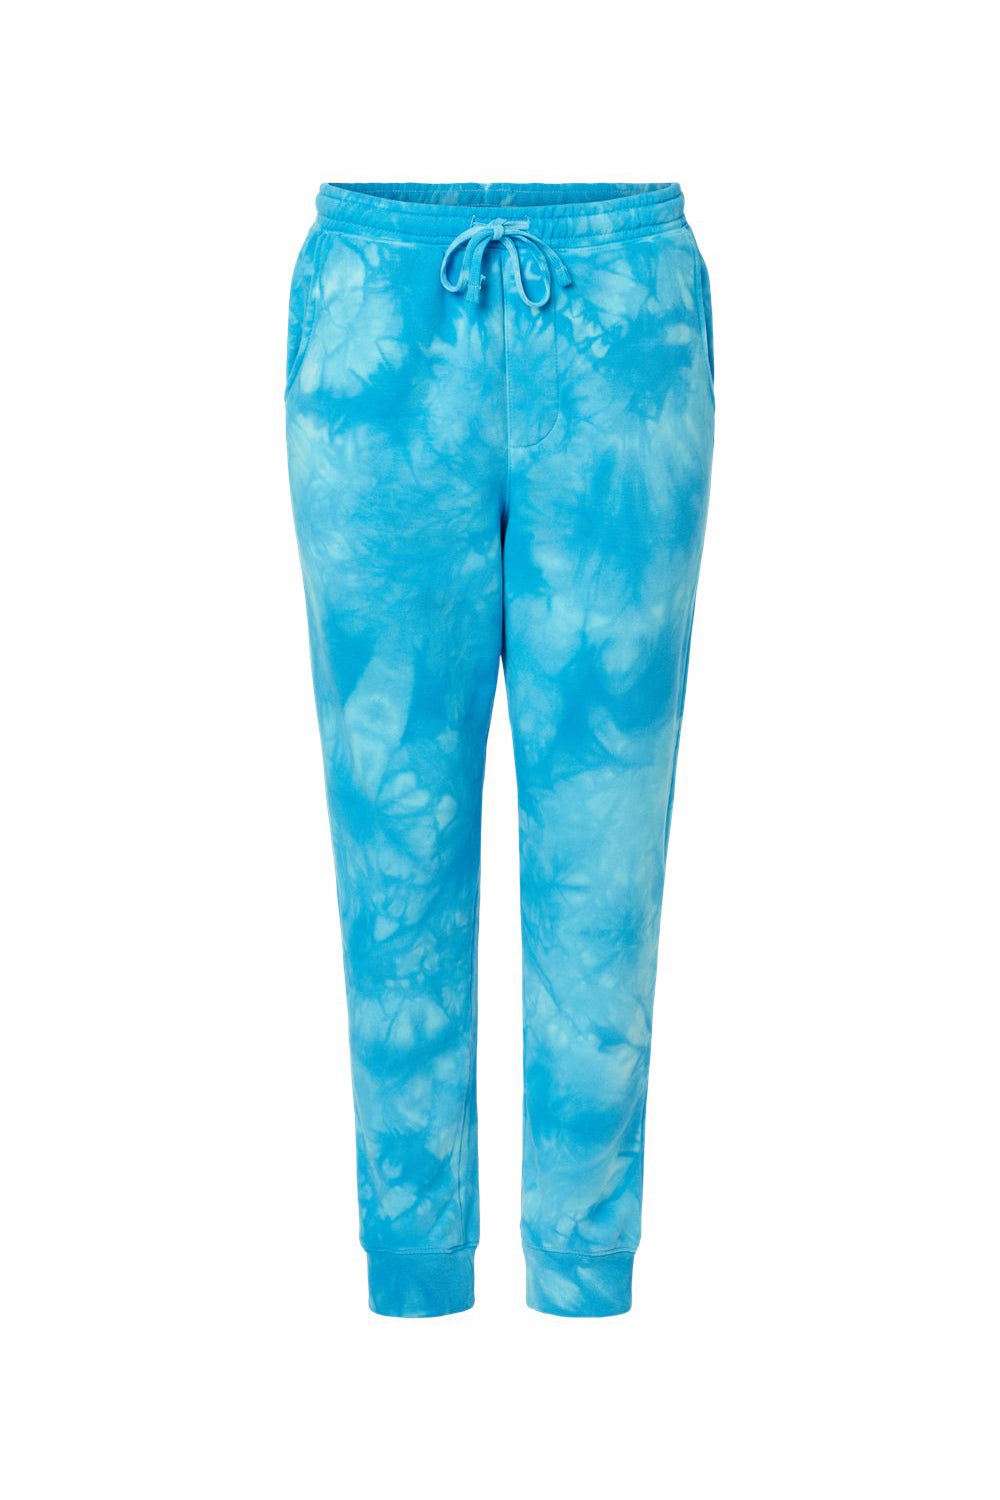 Independent Trading Co. PRM50PTTD Mens Tie-Dye Fleece Sweatpants w/ Pockets Aqua Blue Flat Front